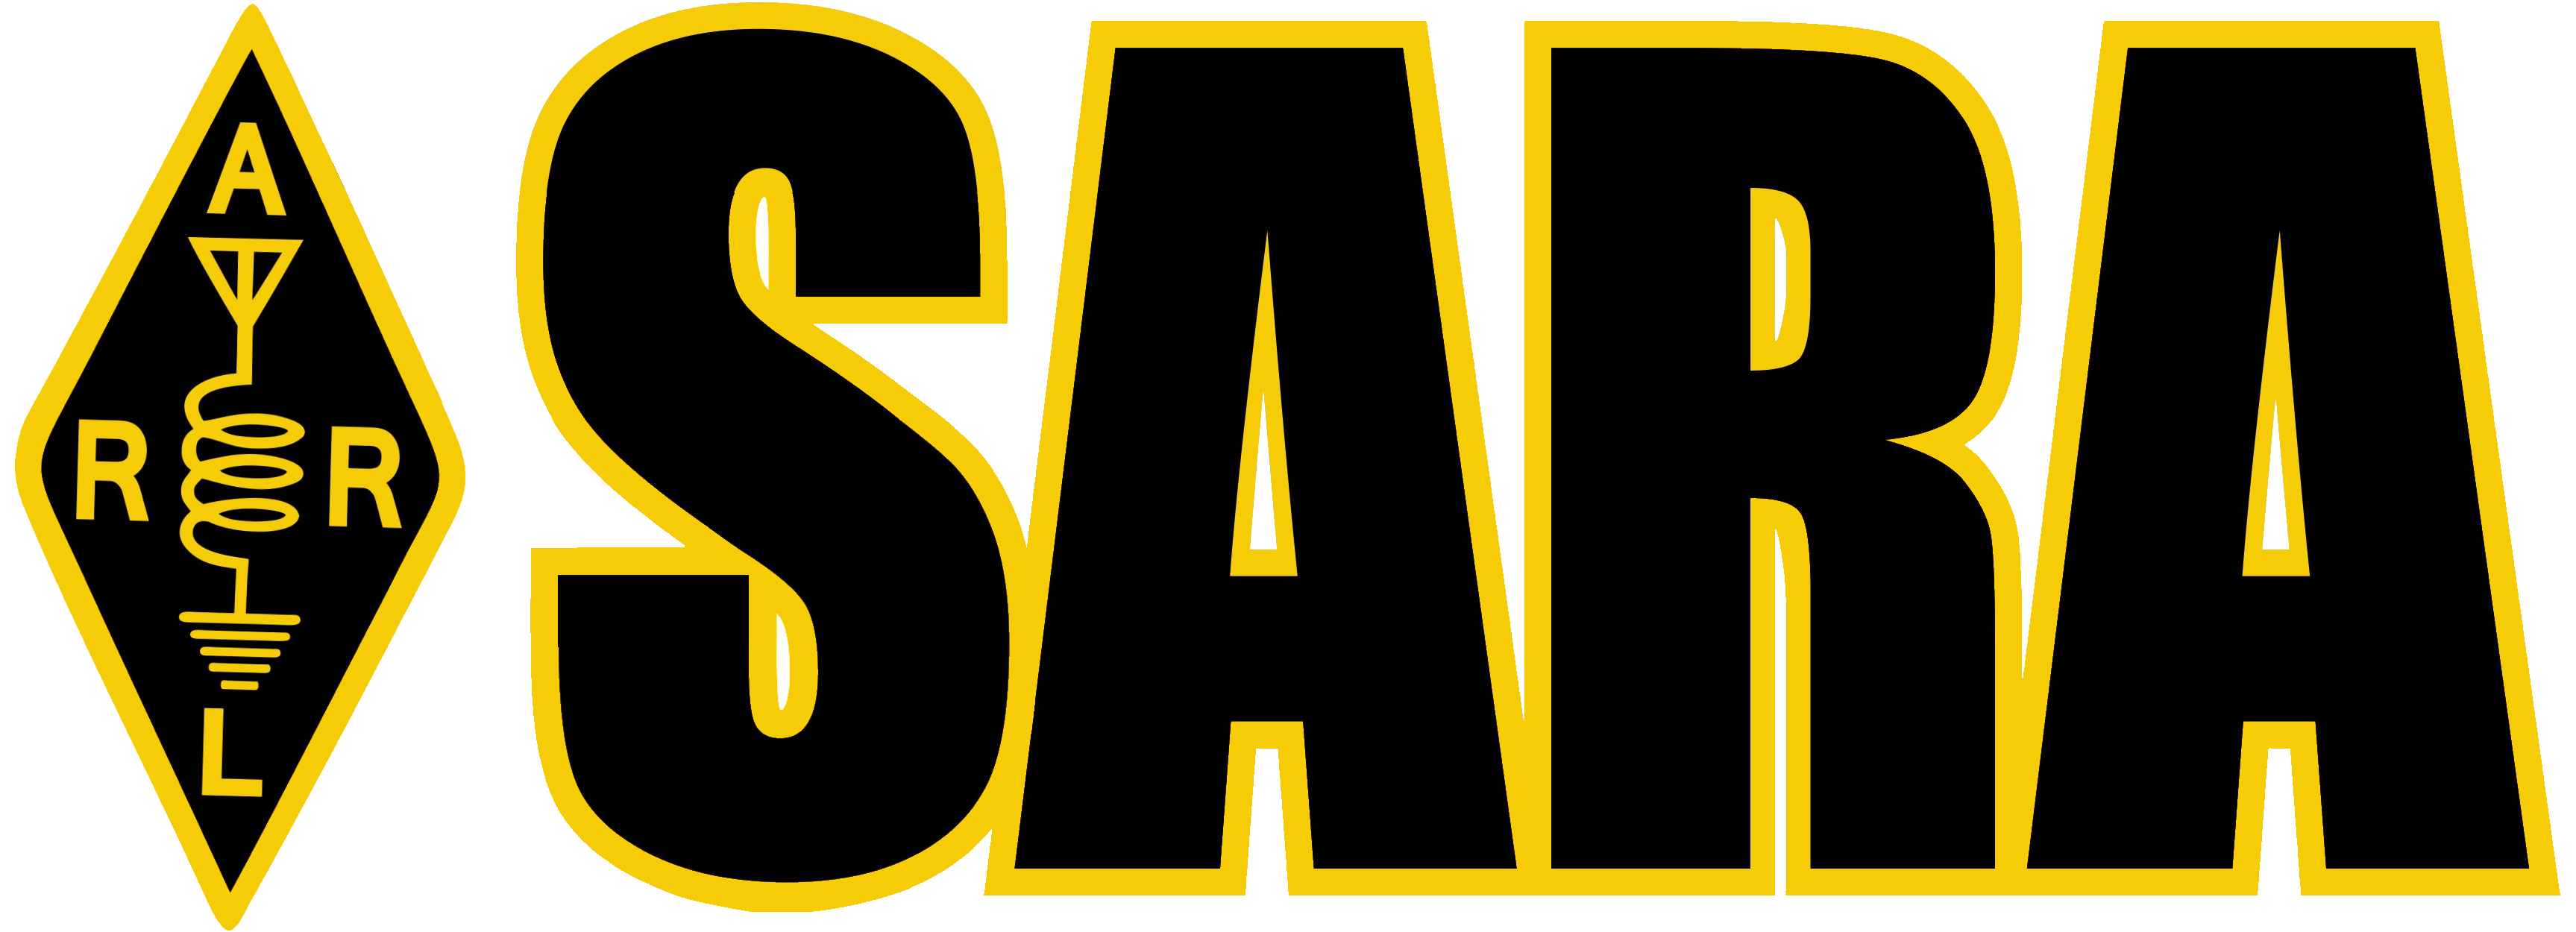 ARRL Logo - SARA Branding and Image